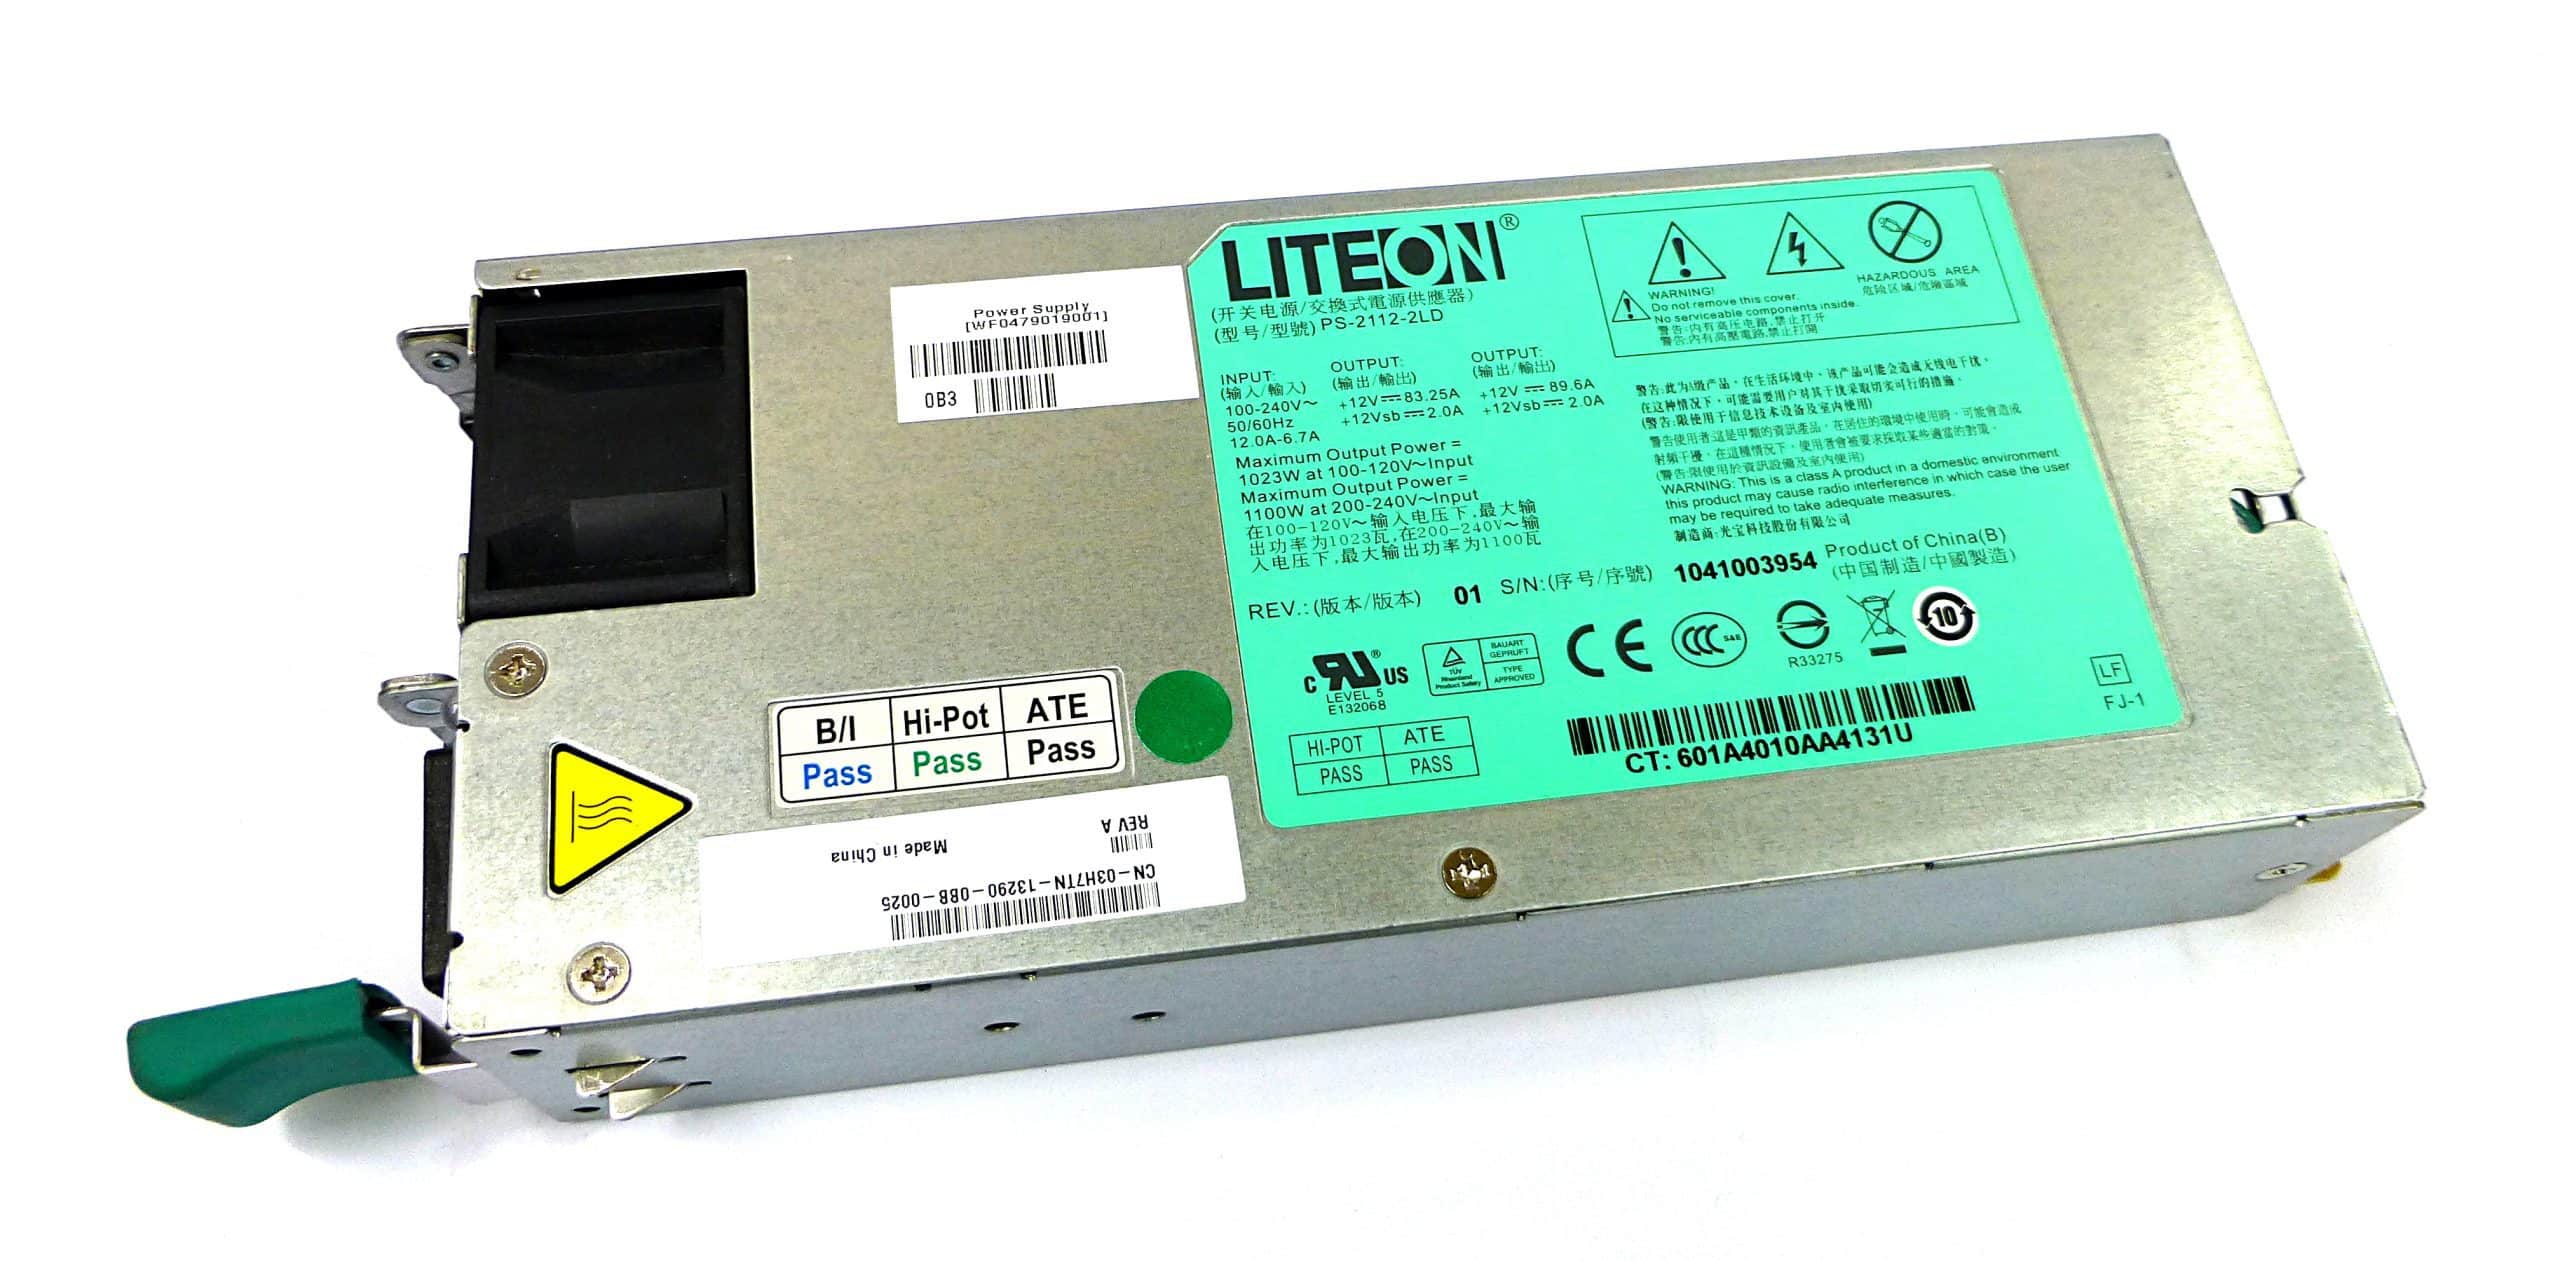 LITEON PS-2112-2LD 1100W Power Supply Module